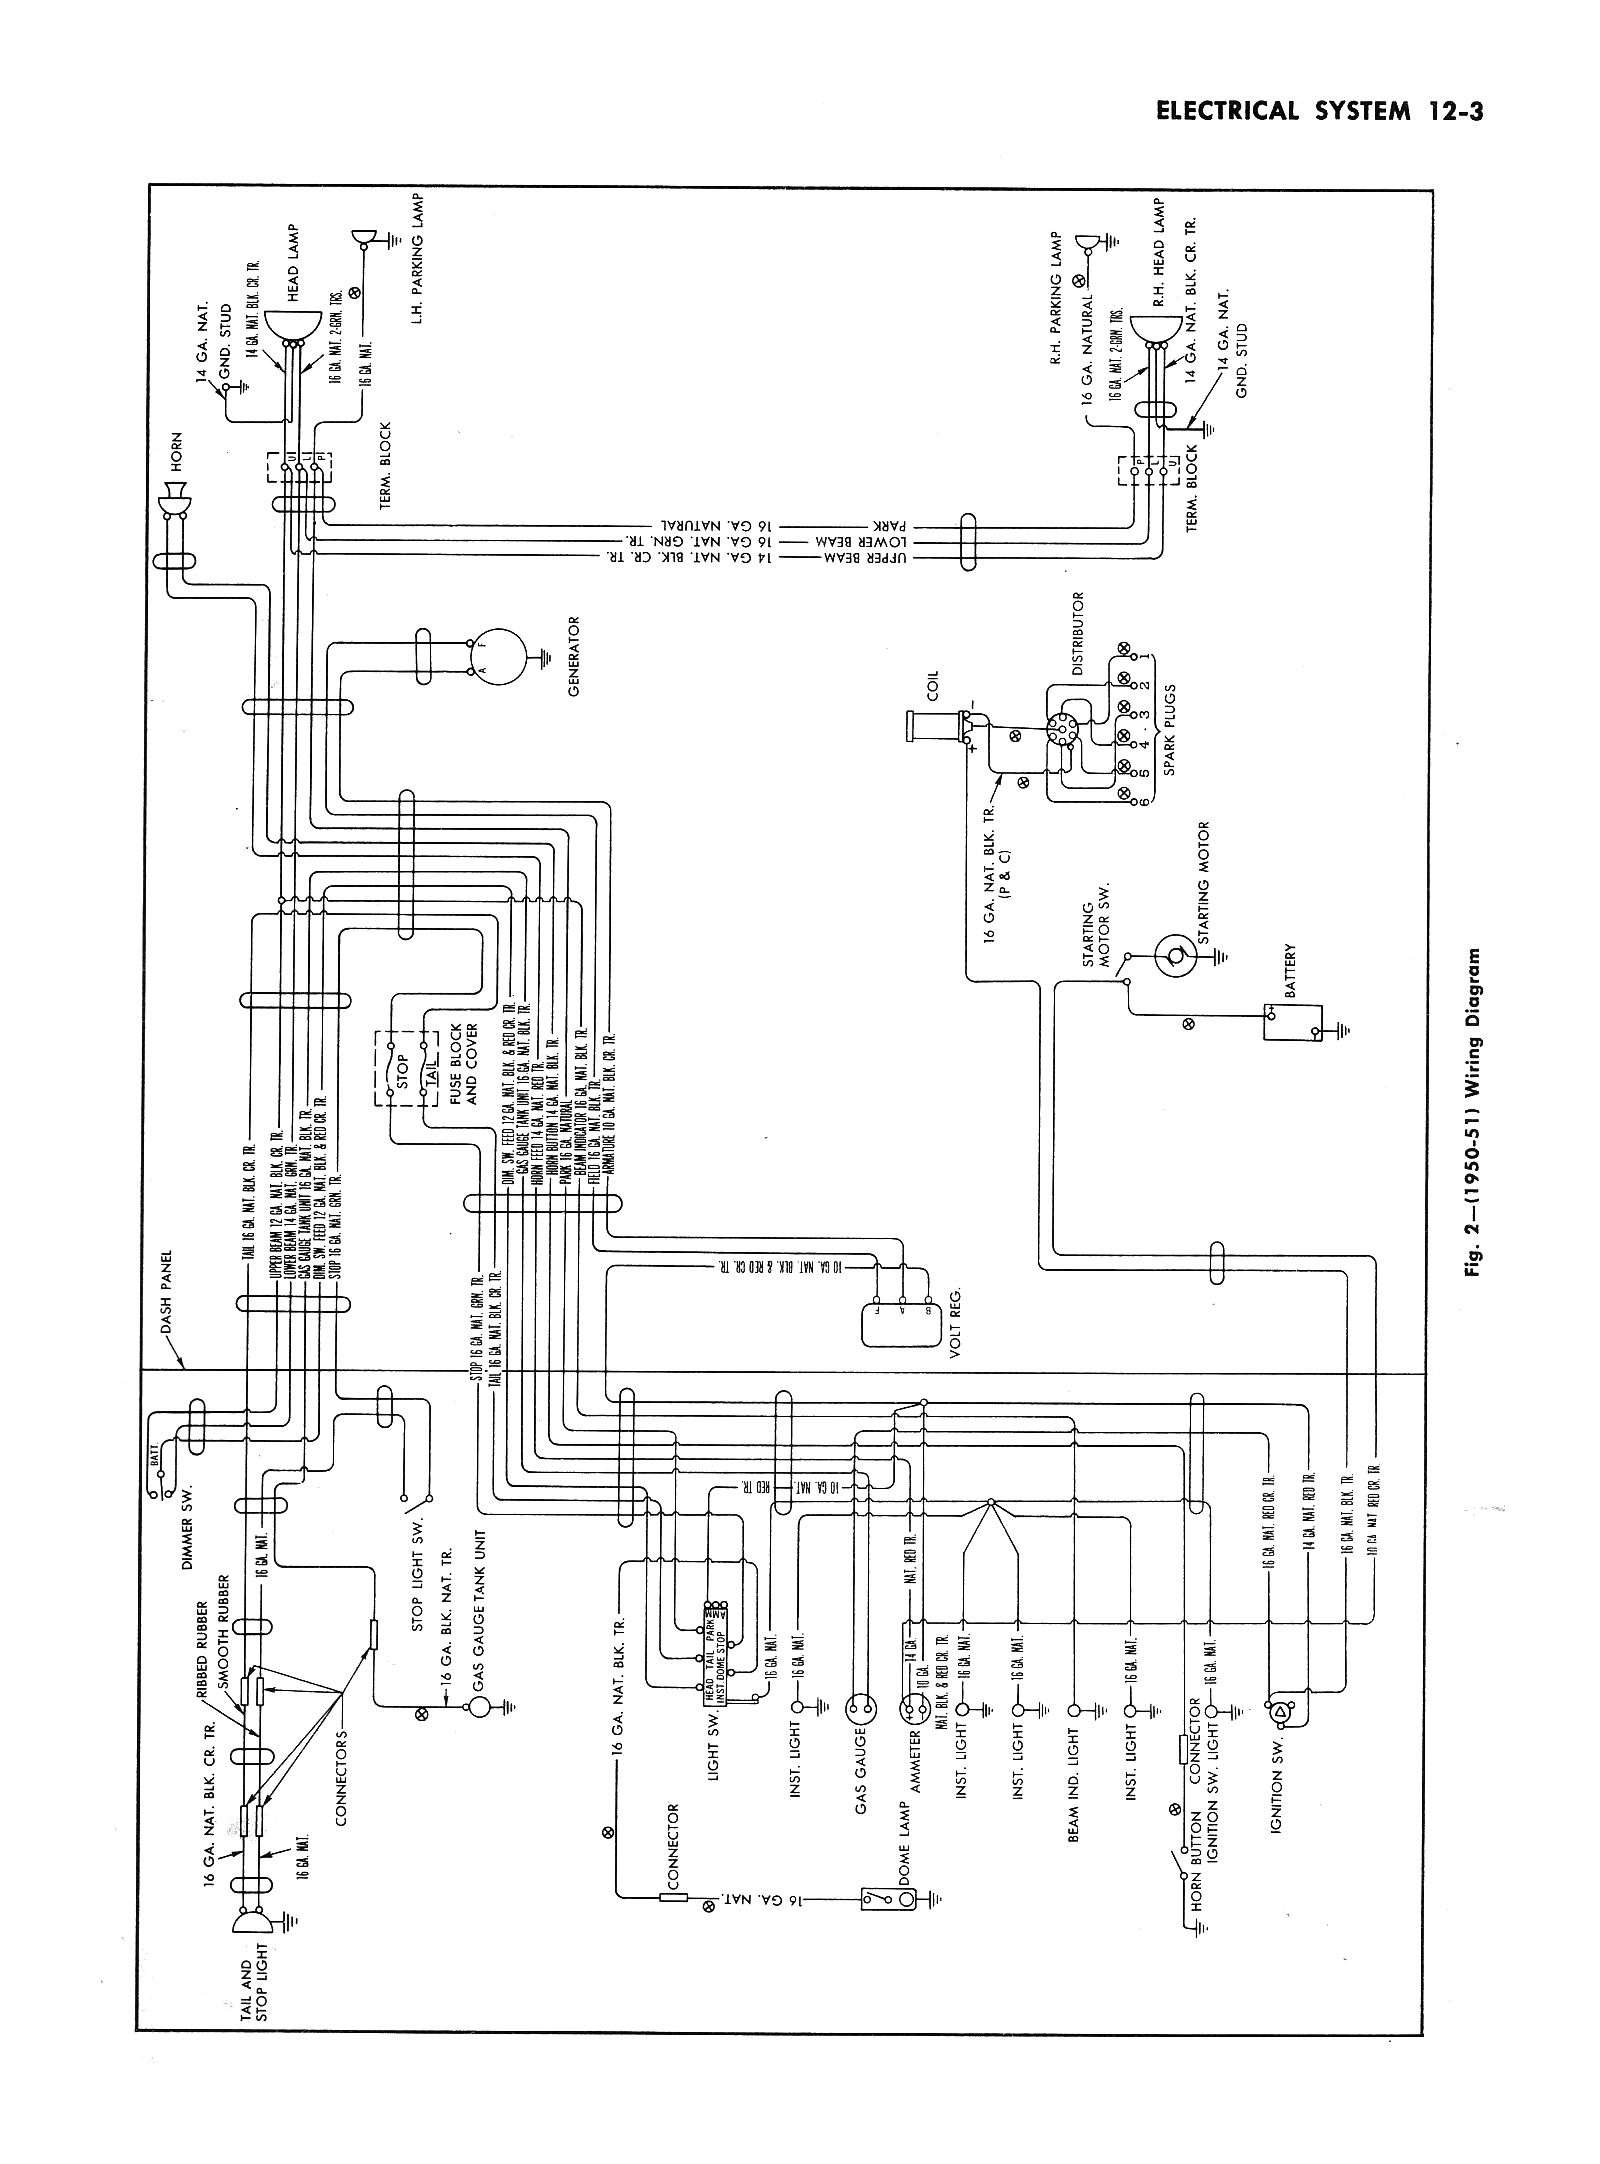 Chevy Wiring Diagrams - Wiring Schematic Diagram